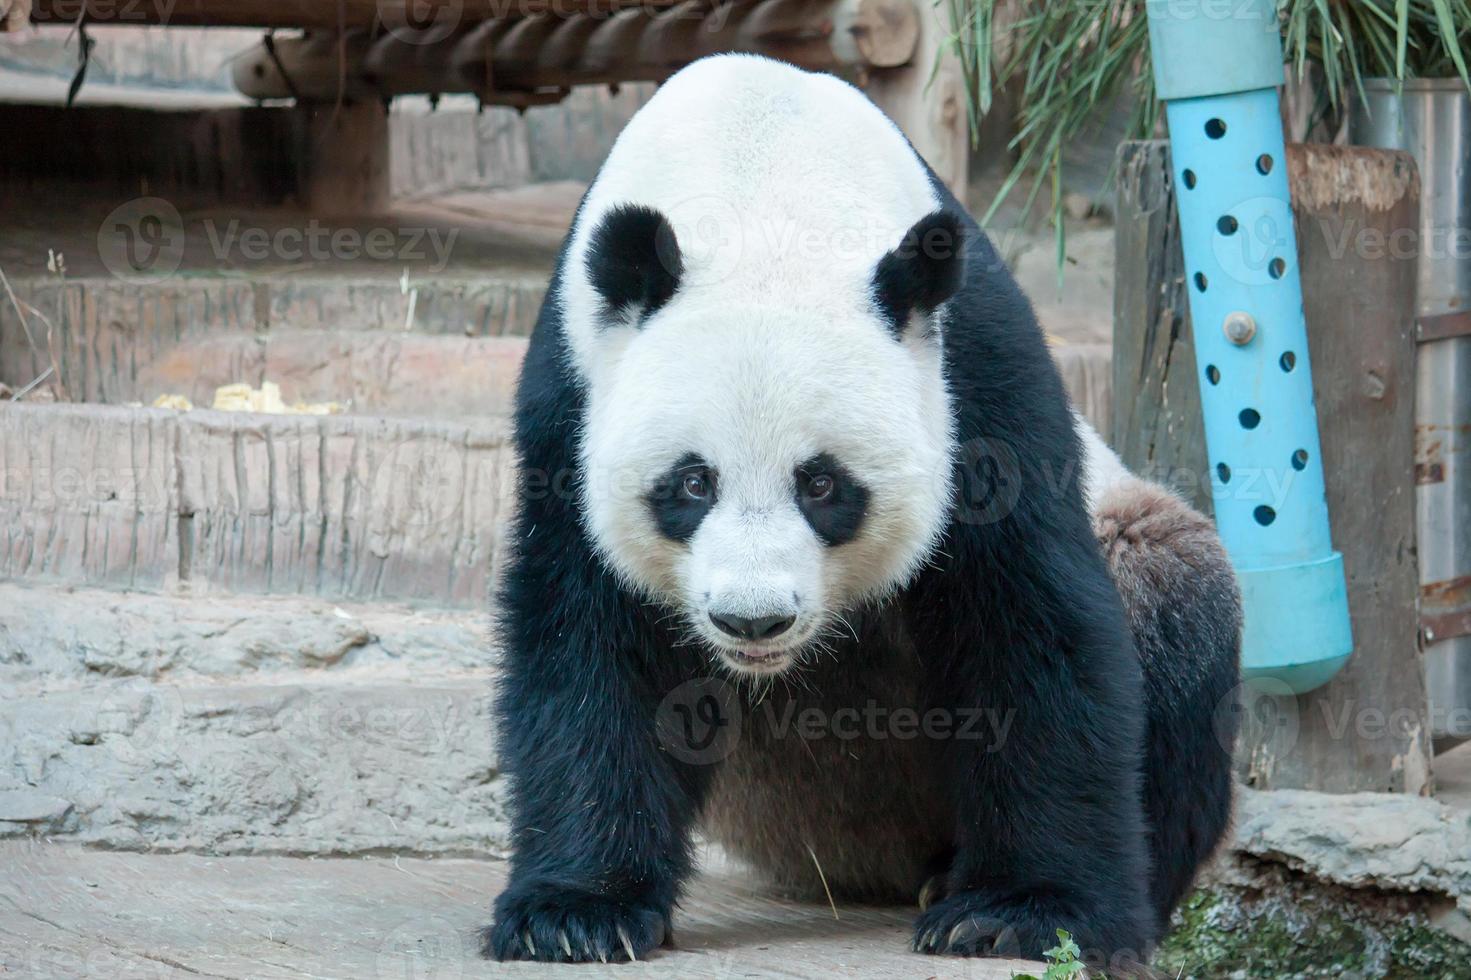 giant panda bear photo